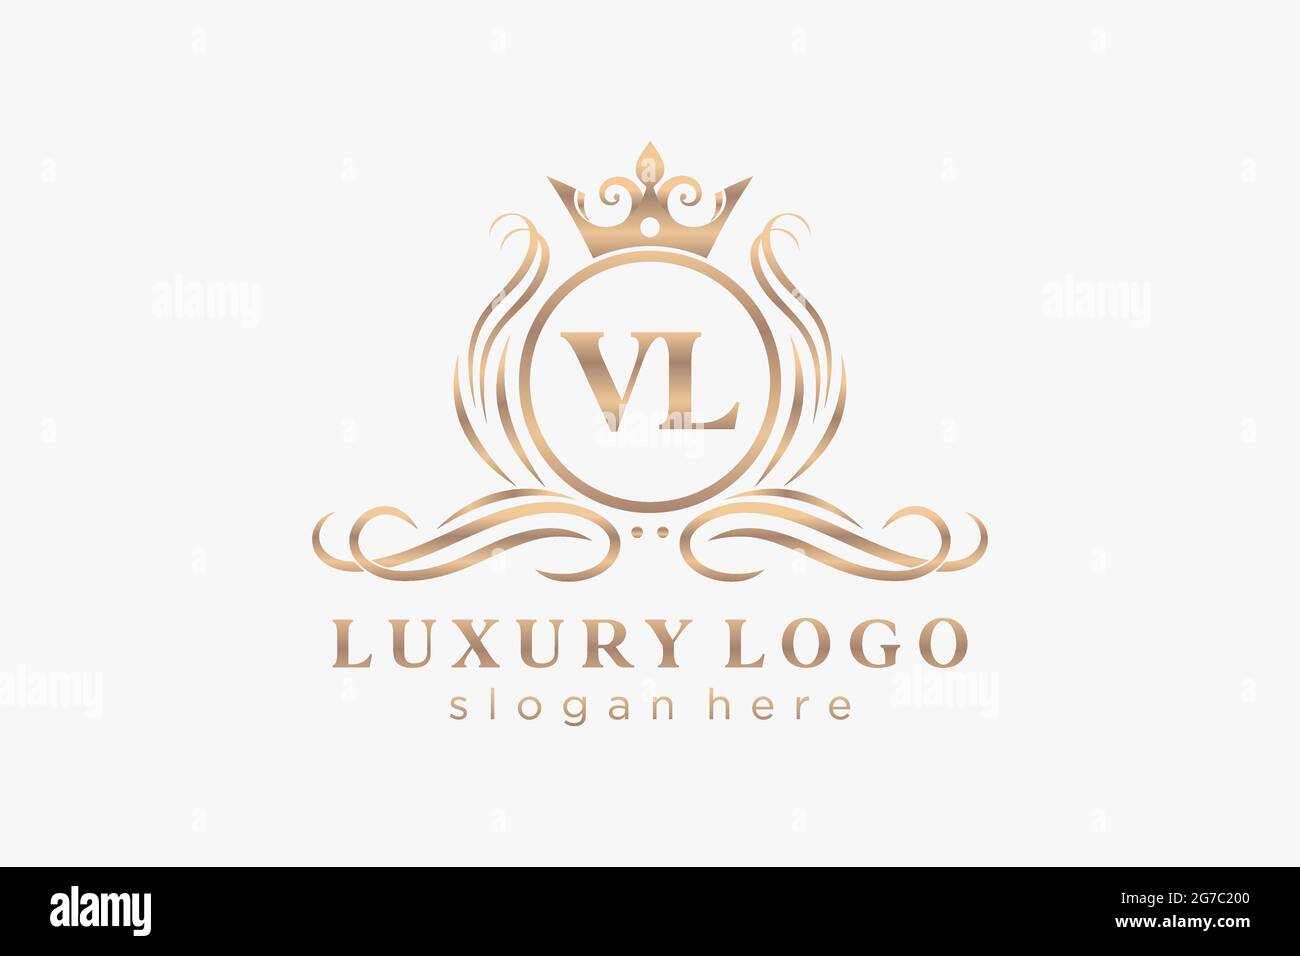 1,344 Vl Logo Design Images, Stock Photos, 3D objects, & Vectors